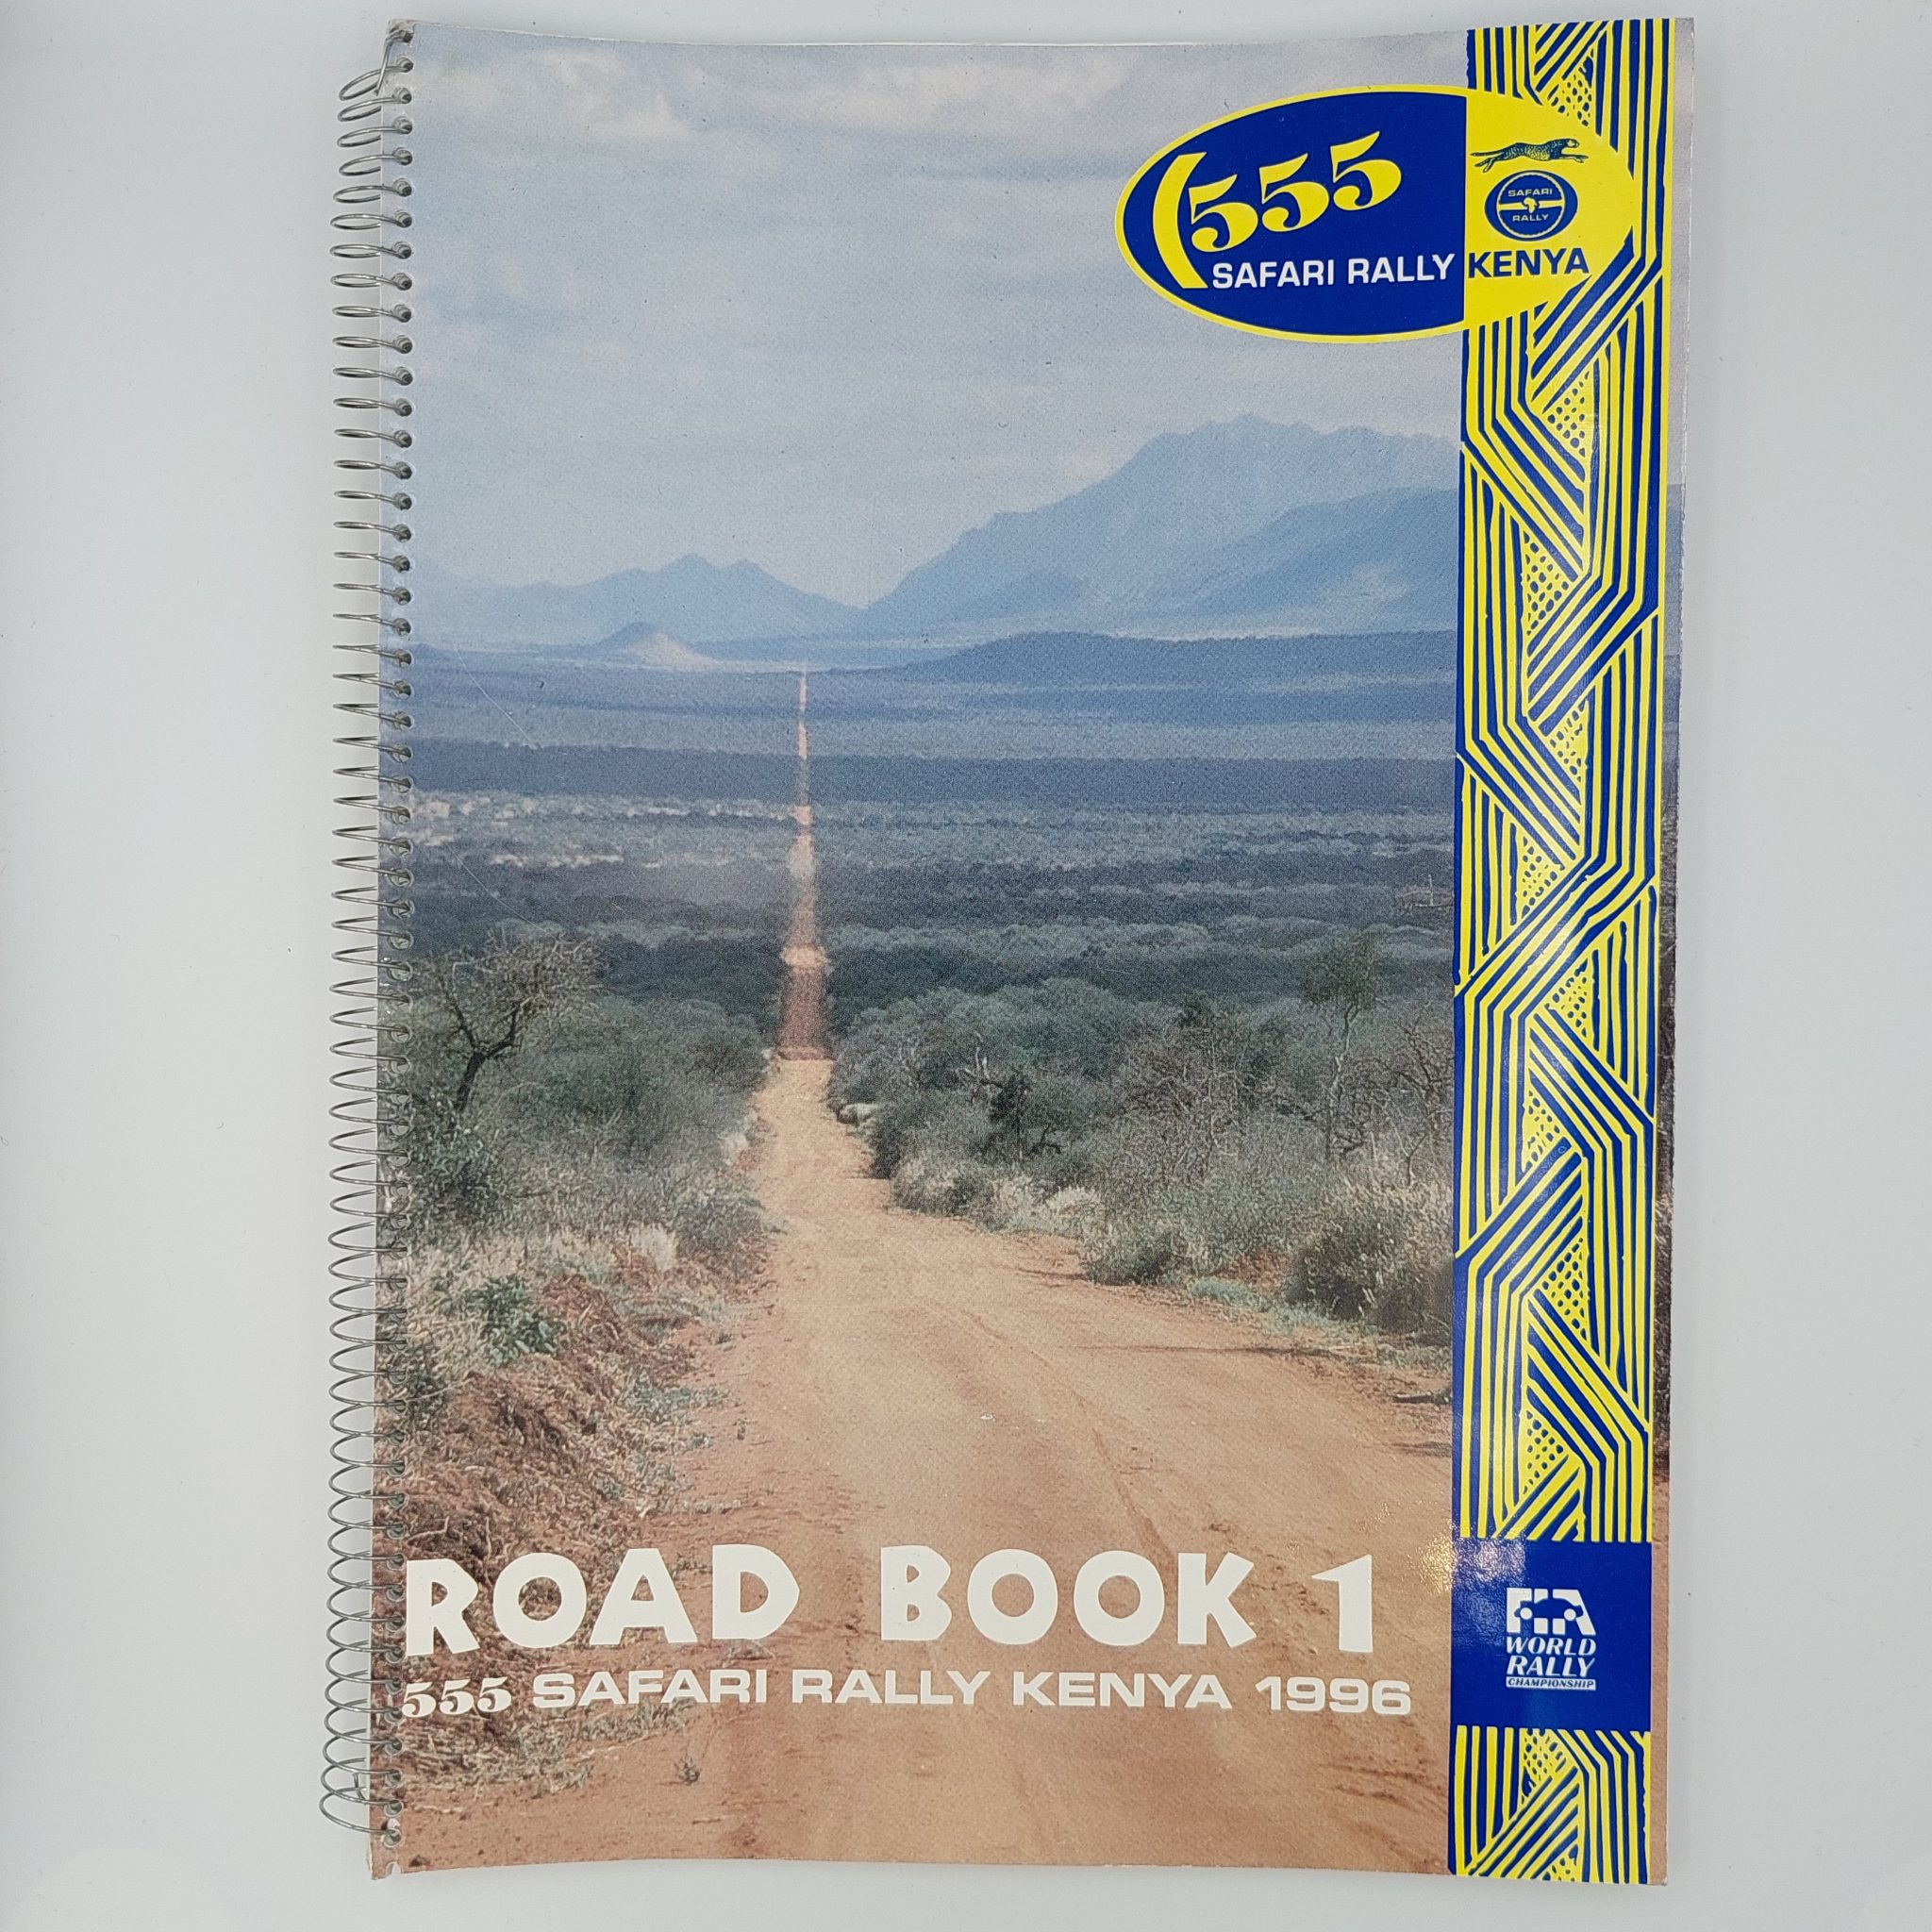 Roadbook 1